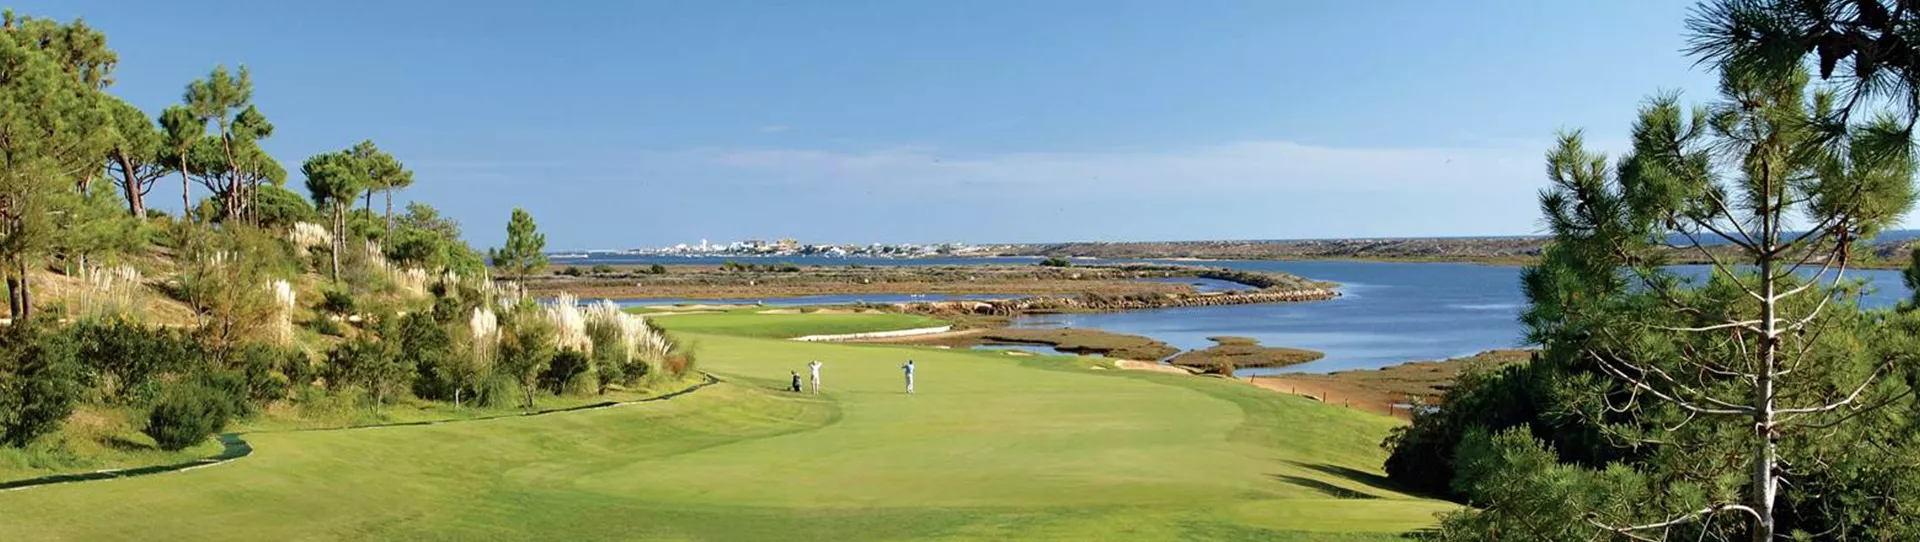 Portugal golf courses - San Lorenzo Golf Course - Photo 1